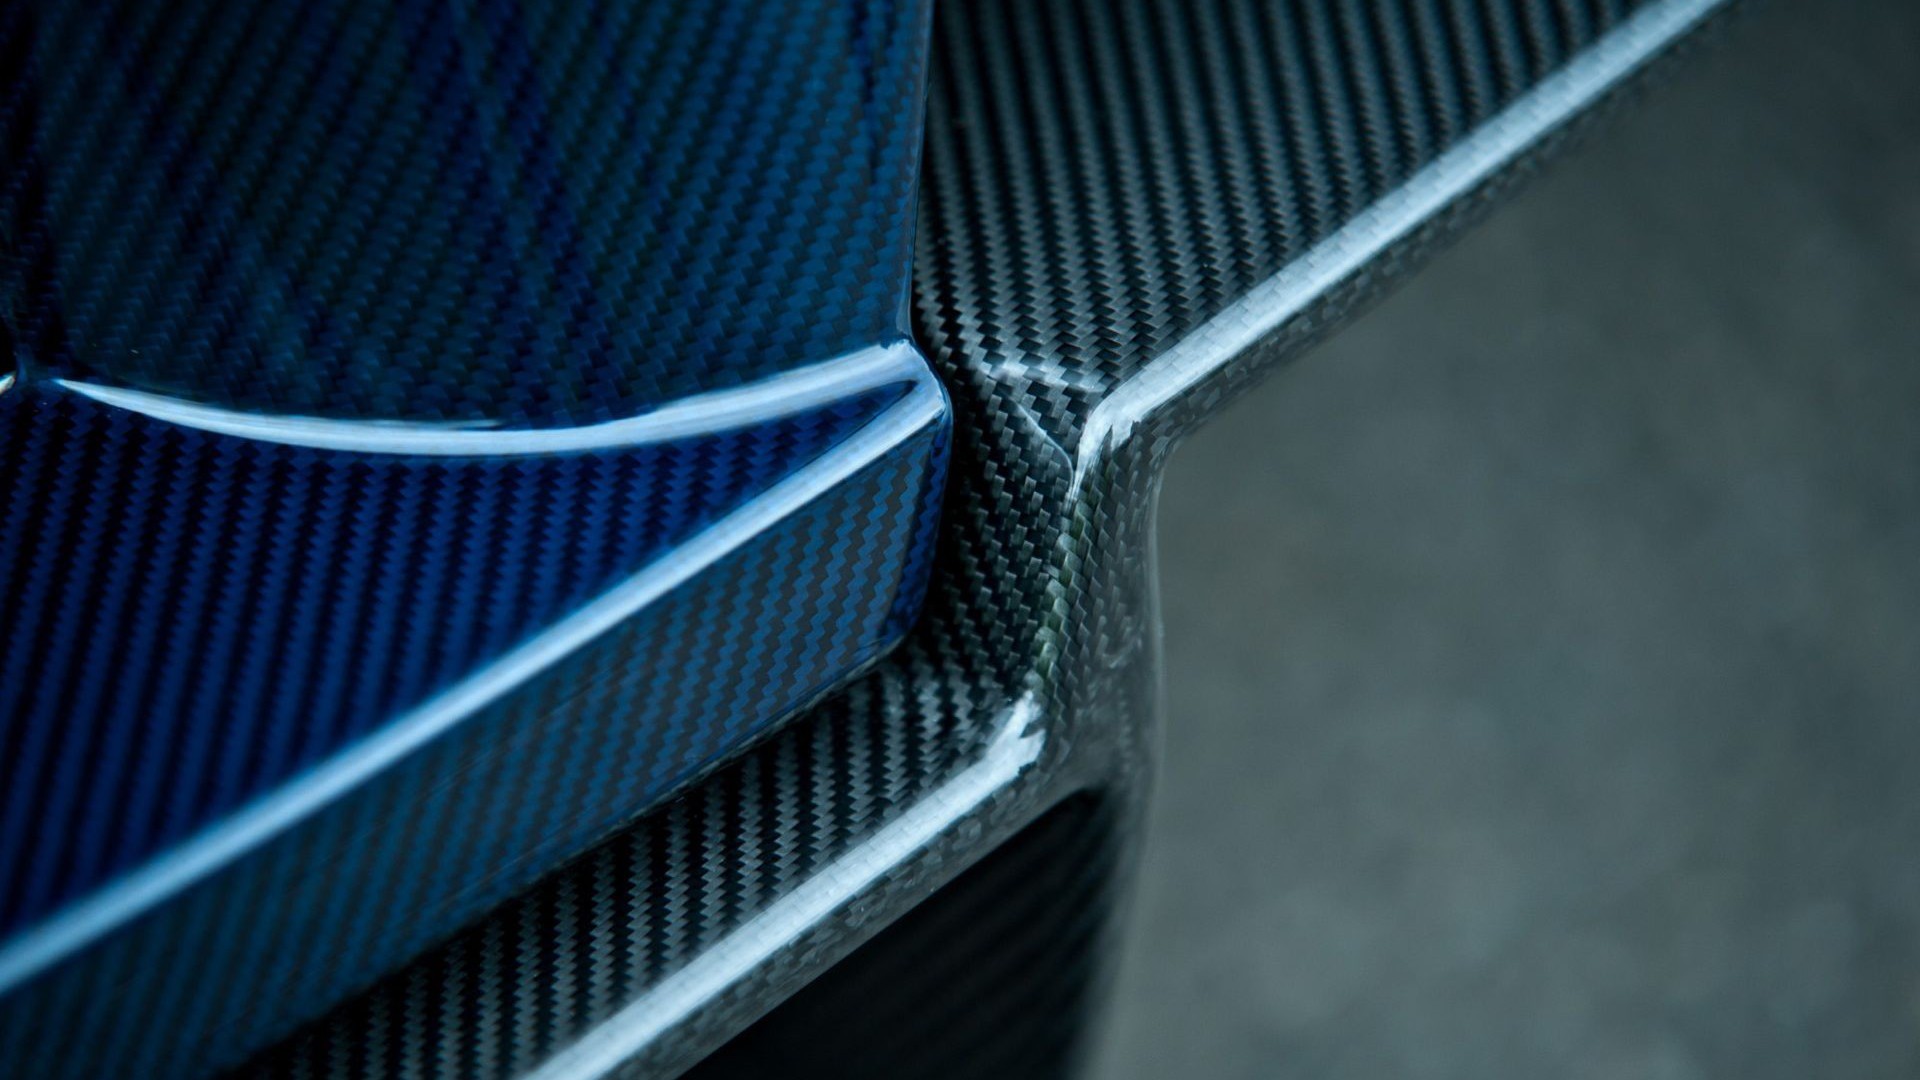 Zonda-audi-subaru-artwork-supercars-carbon-fiber-HD-wallpaper.jpg